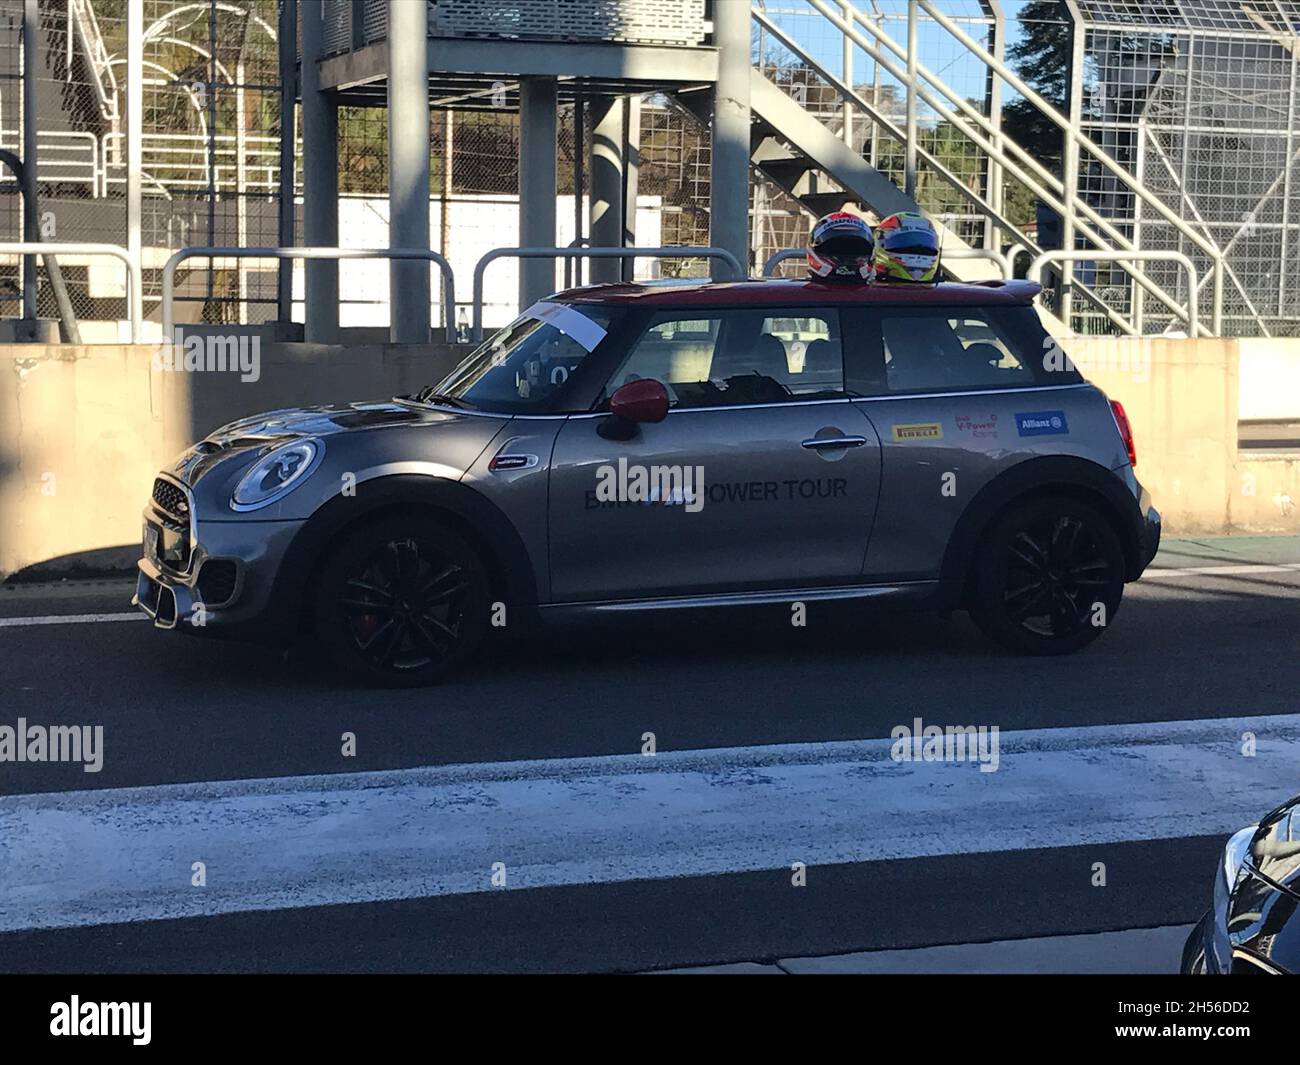 BMW M Power Tour: Mini Cooper, grau mit zwei Helmen auf dem Dach, bei Autodromo José Carlos Pace oder Autodromo de Interlagos. São Paulo , Brasilien. Stockfoto